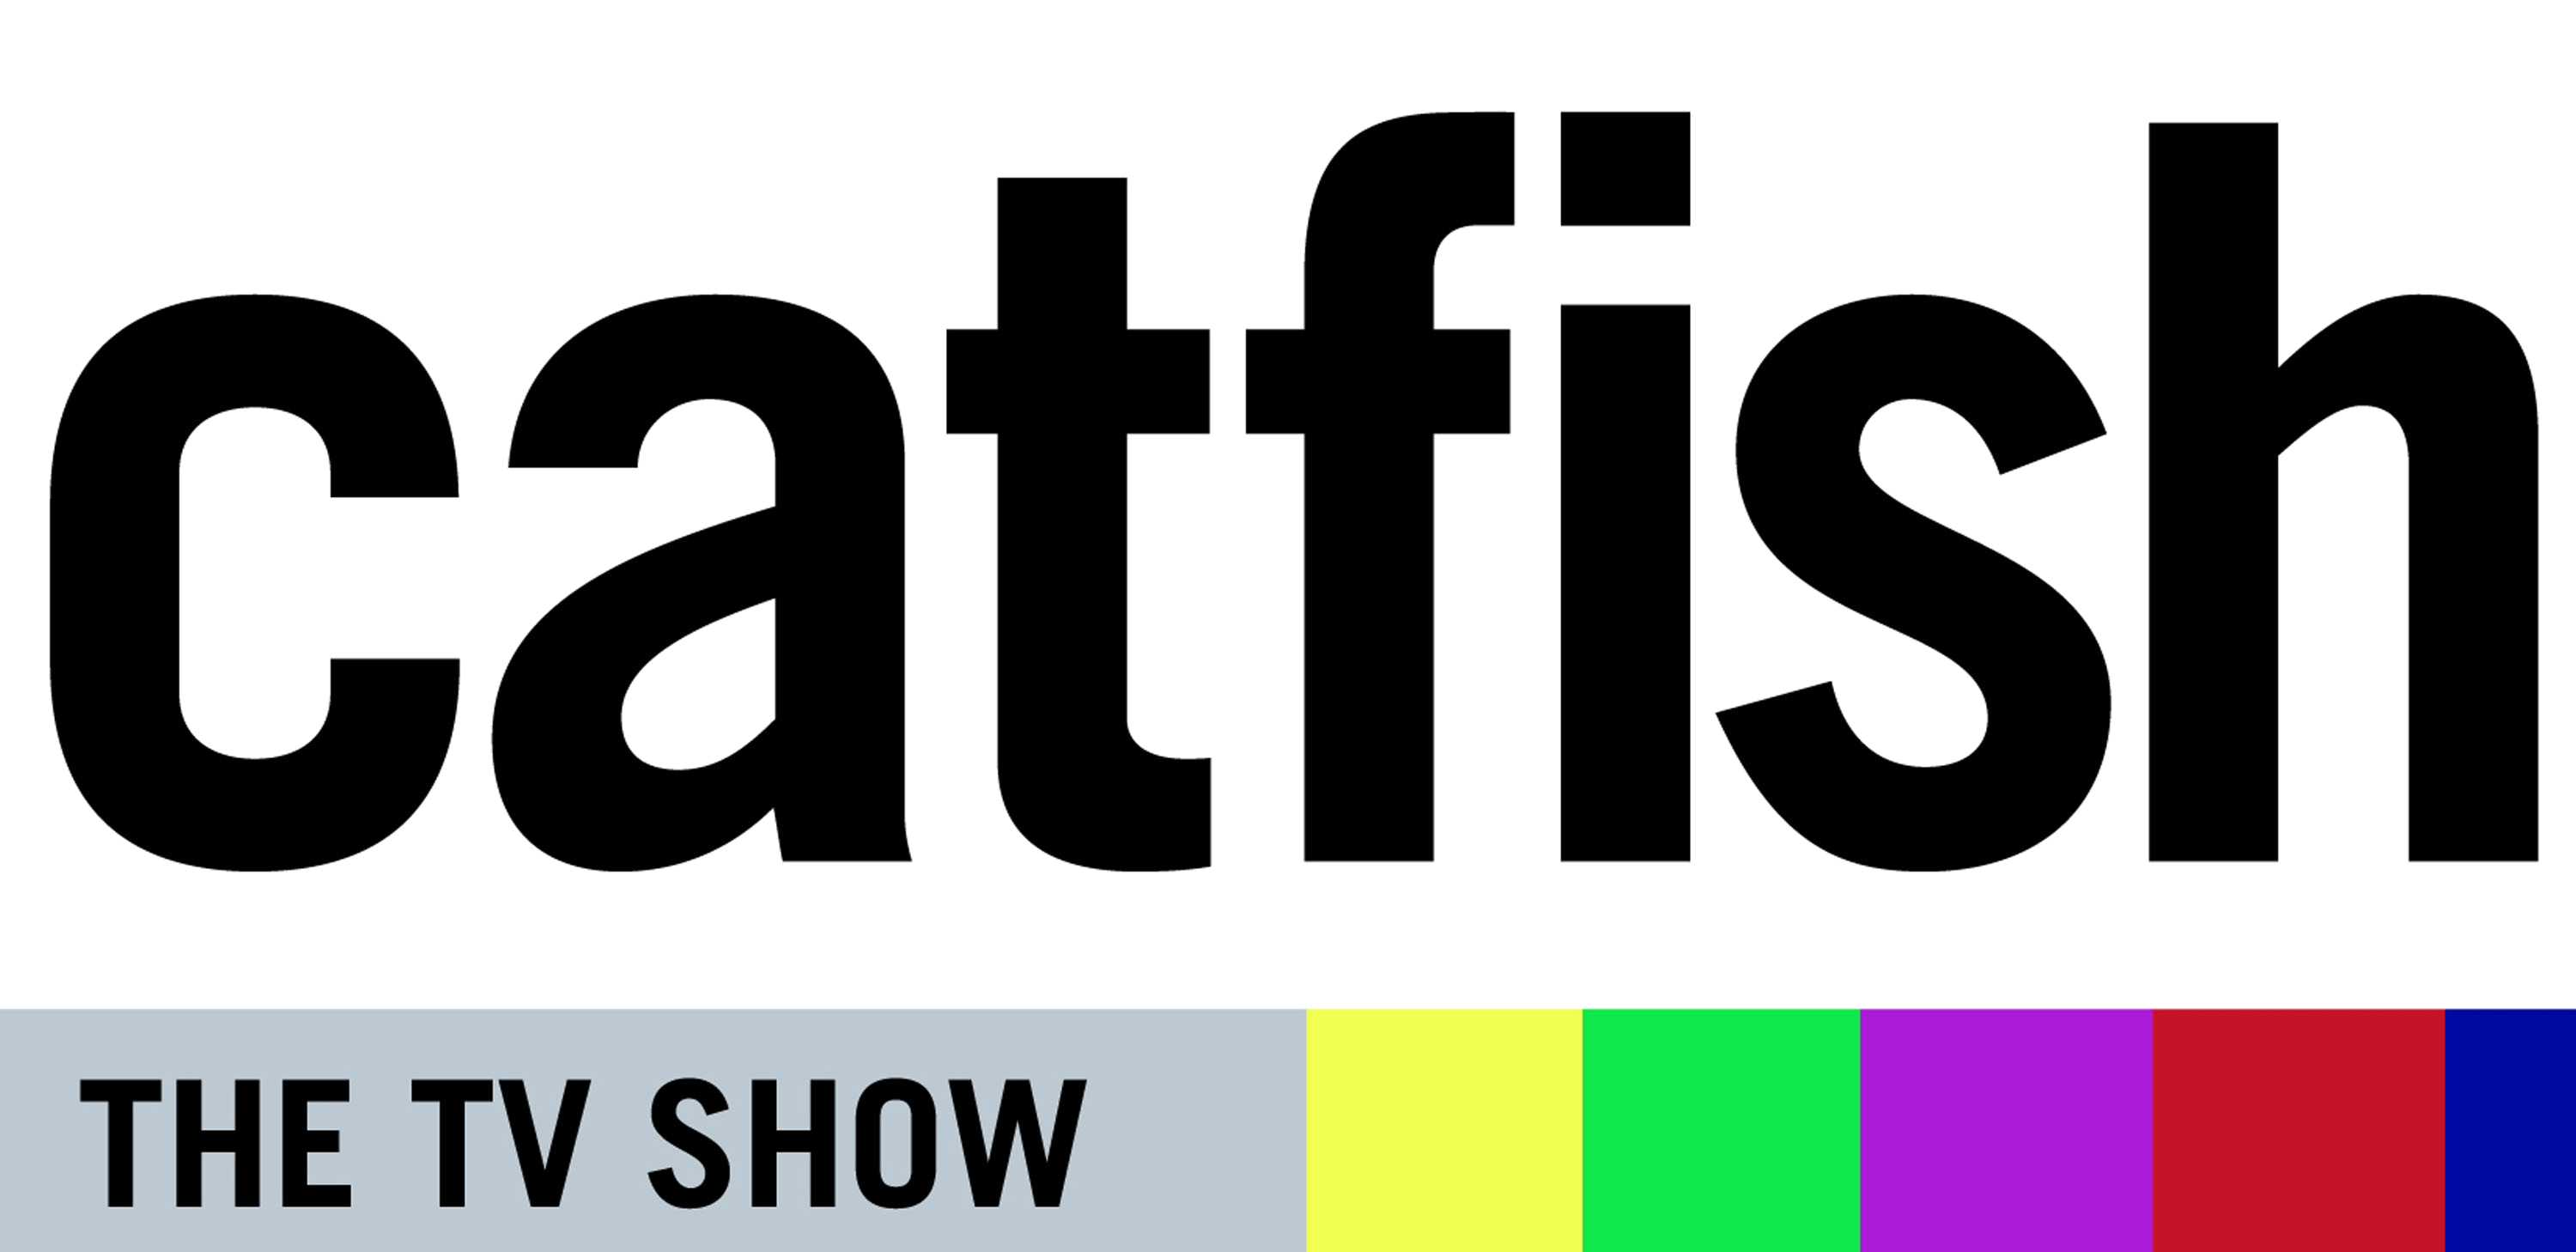 Catfish Logo - Catfish, the TV Show Logo.PNG